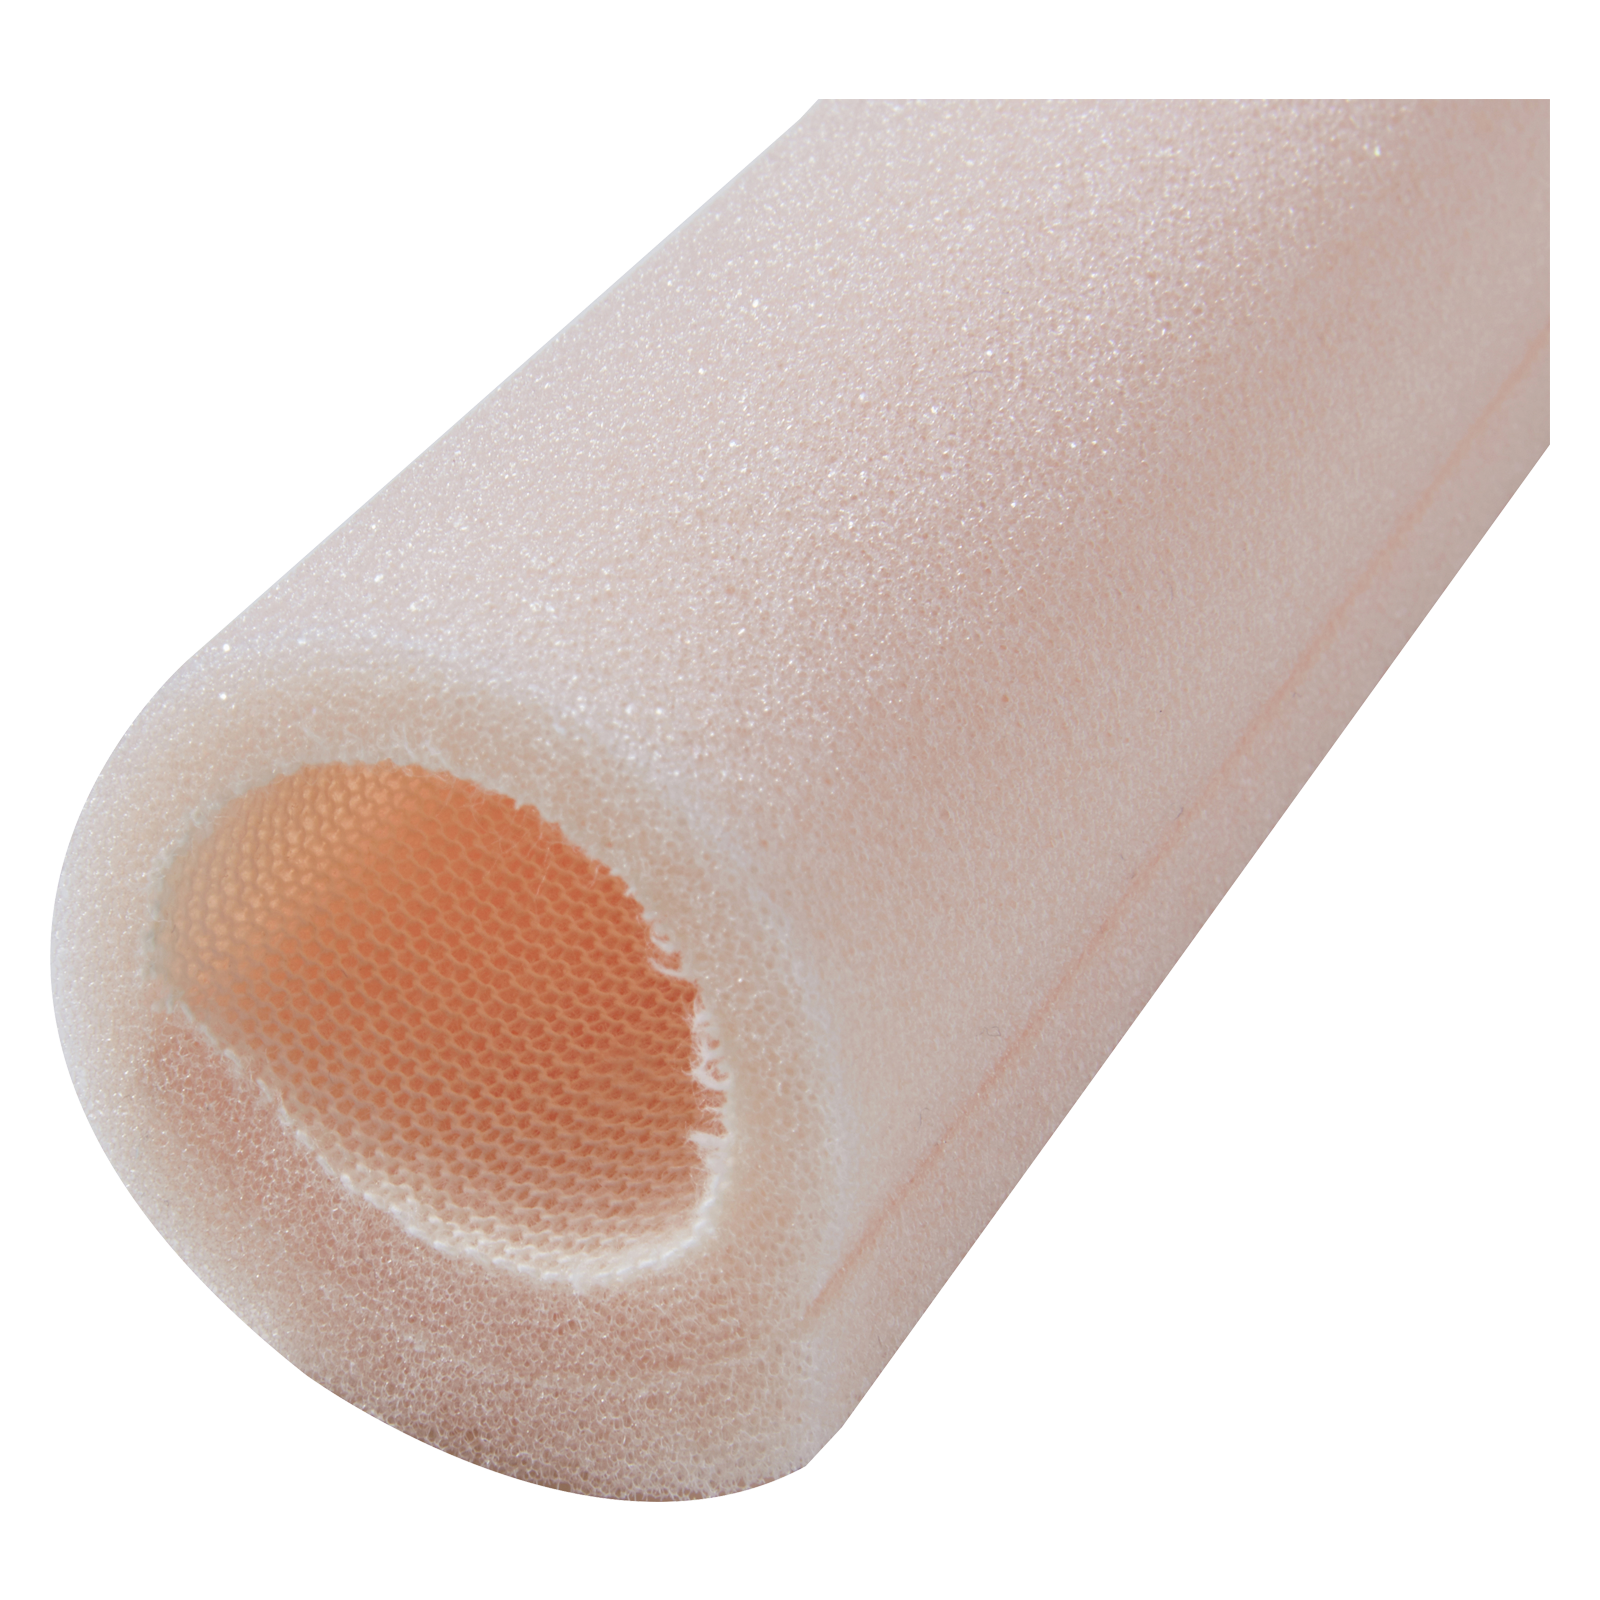 Tubifoam Zehenschutzschlauch, 12 Stück à 25 cm, Gr. 2, Ø 15 mm, überlappend